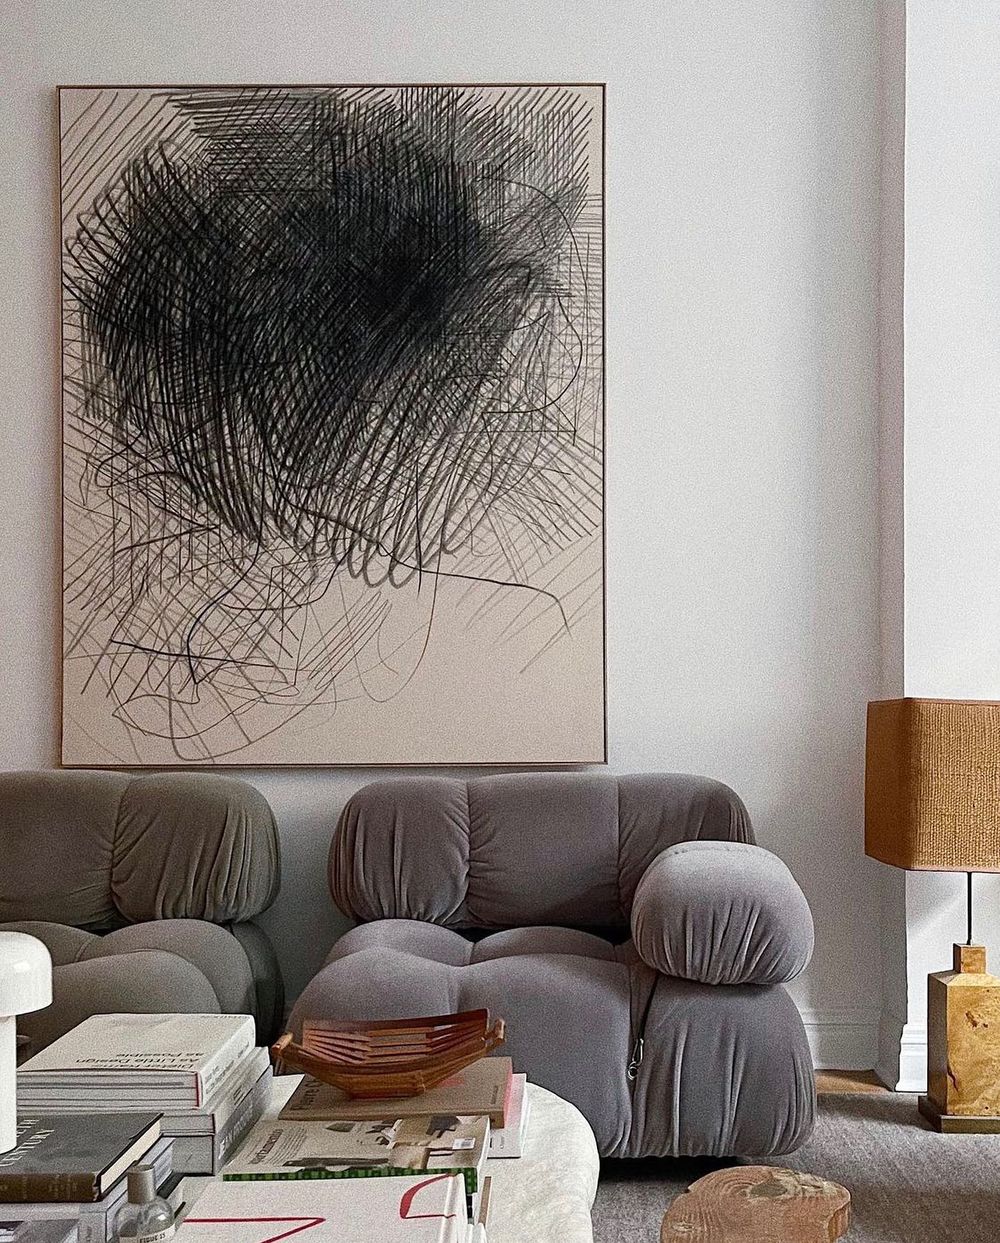 Gray living room ideas Sofa @newyorkzity